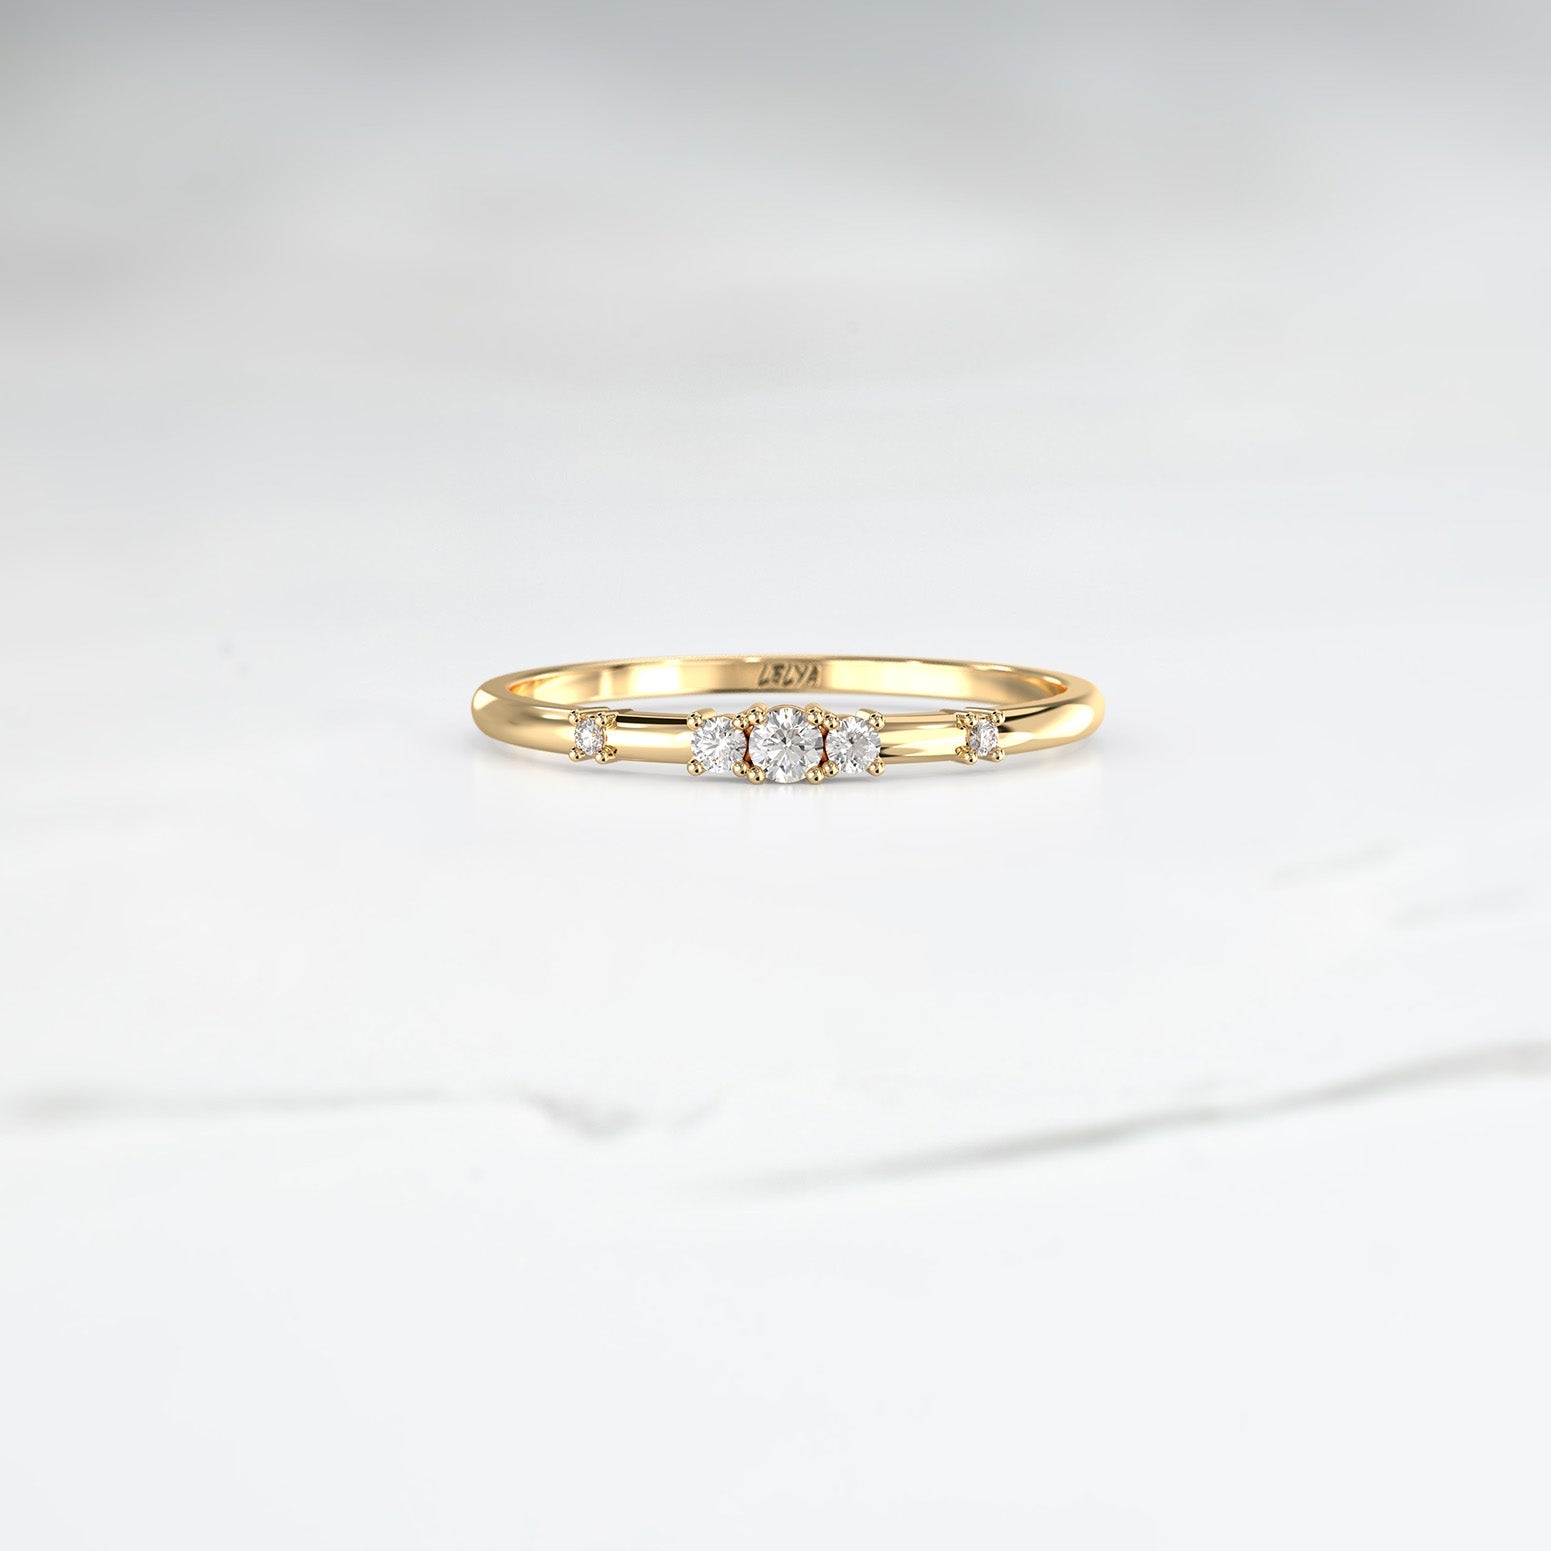 Wandering Star Ring - Lelya - bespoke engagement and wedding rings made in Scotland, UK